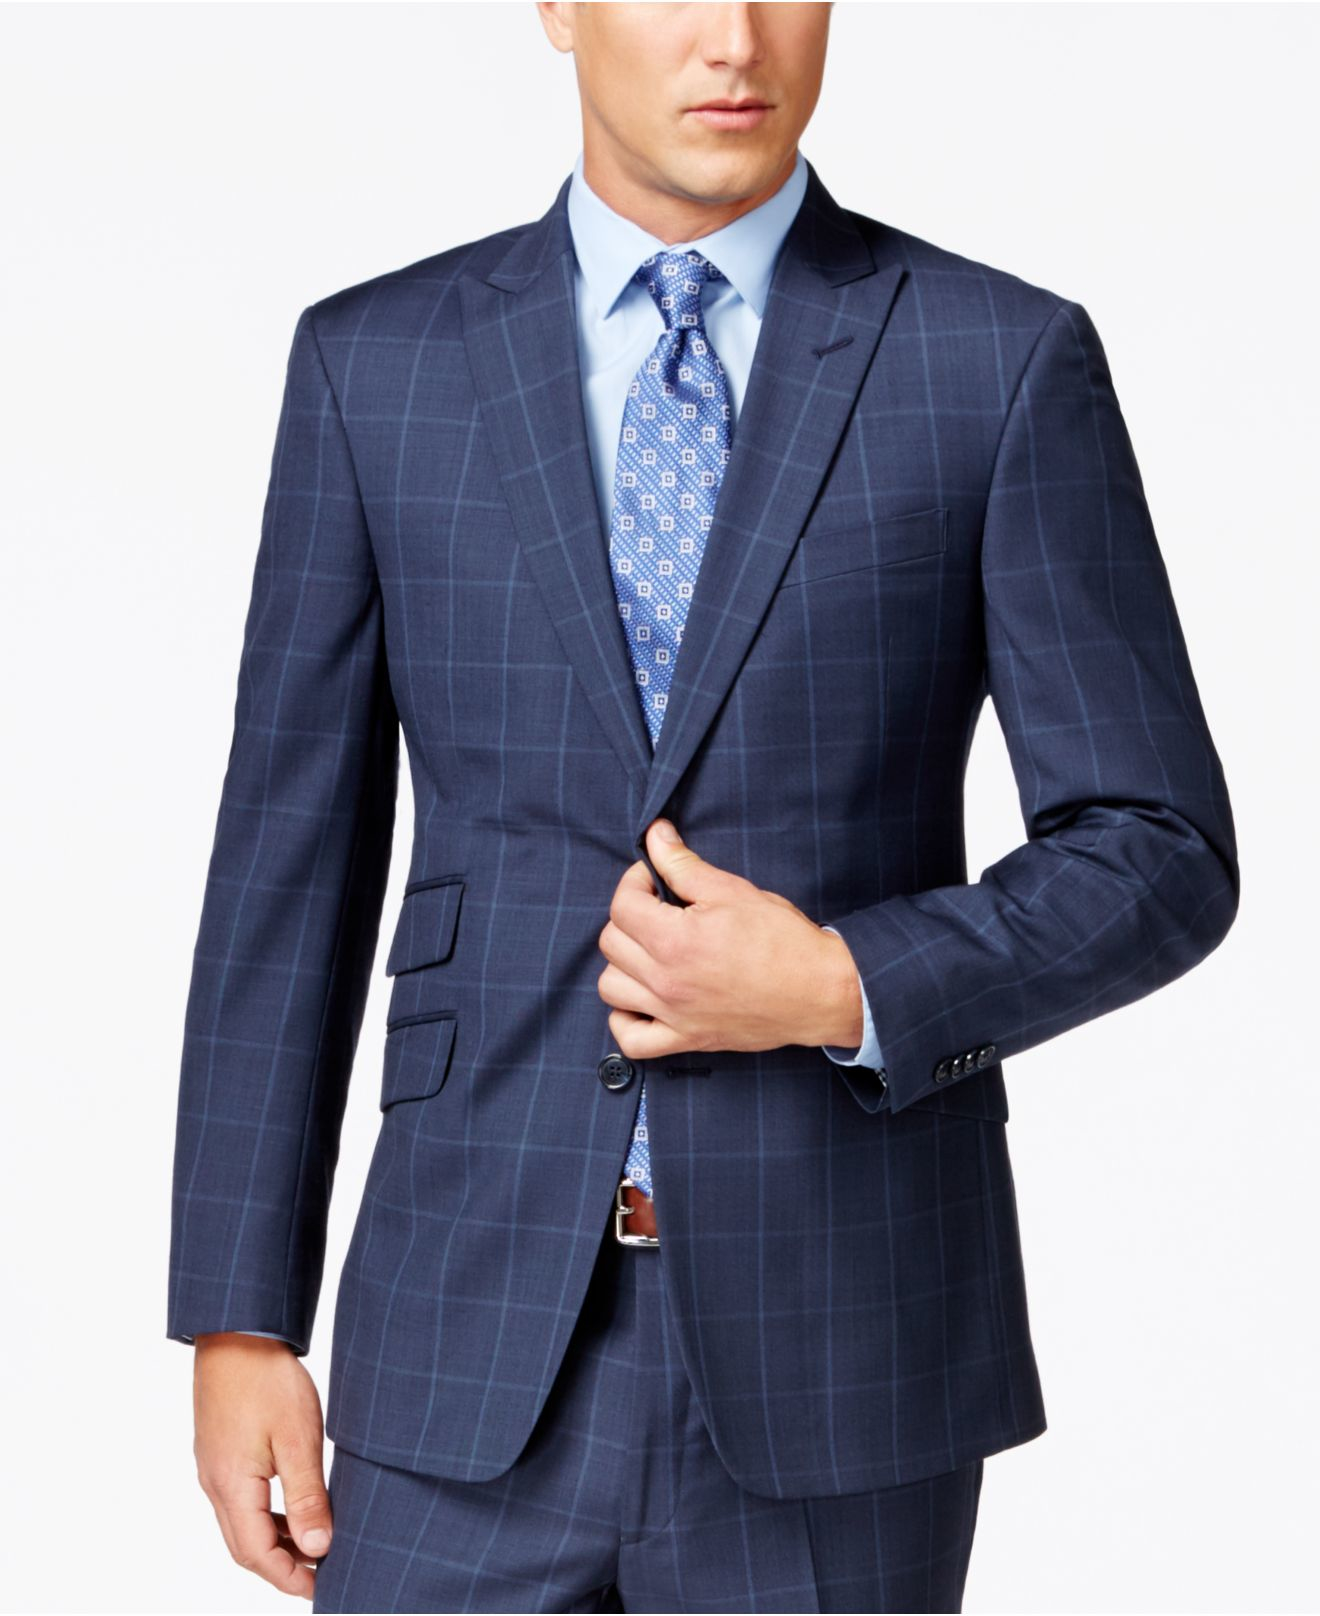 tommy hilfiger navy blue suit